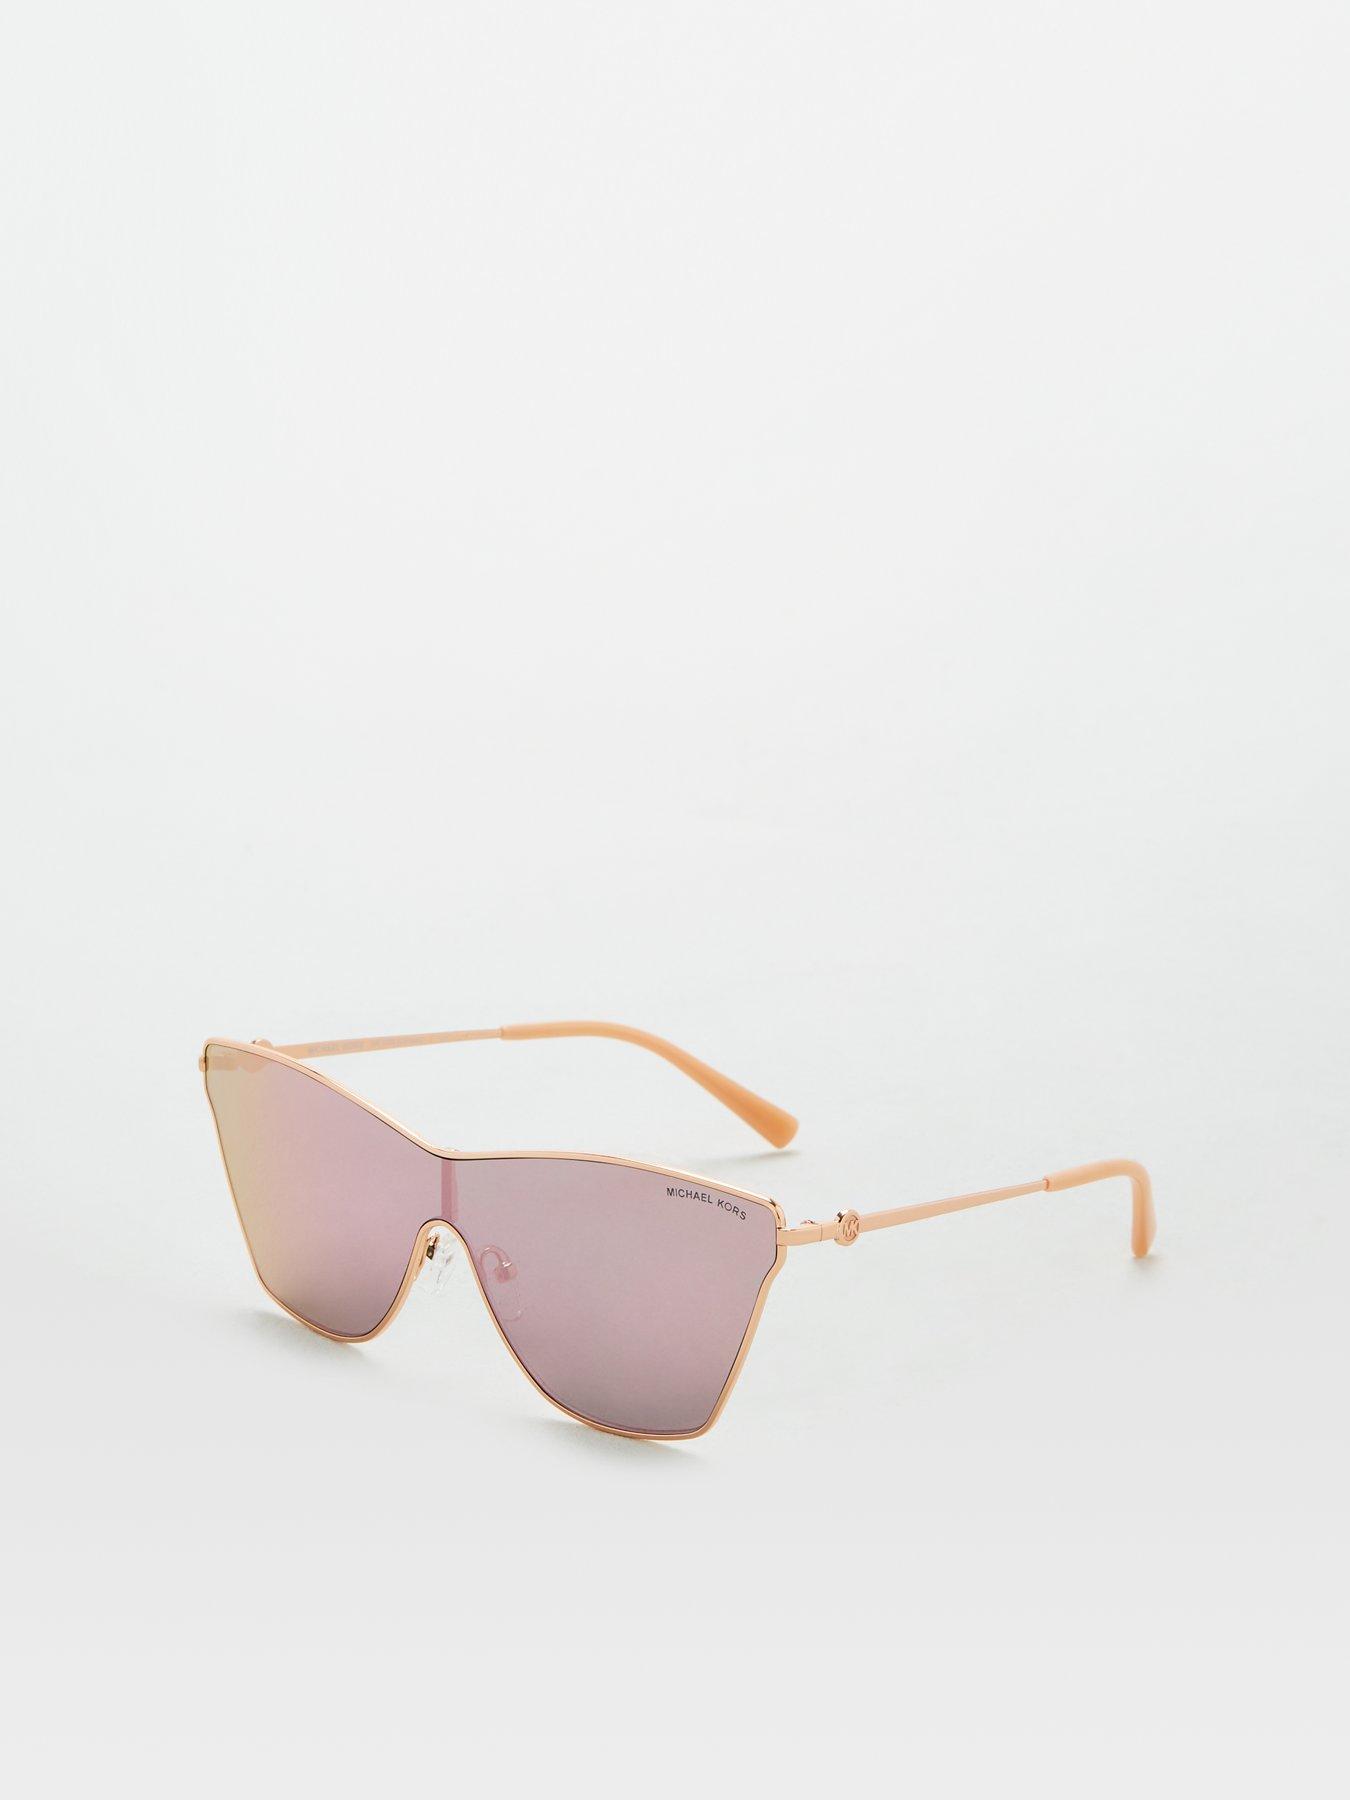 Accessories Cat Eye Sunglasses - Rose Gold